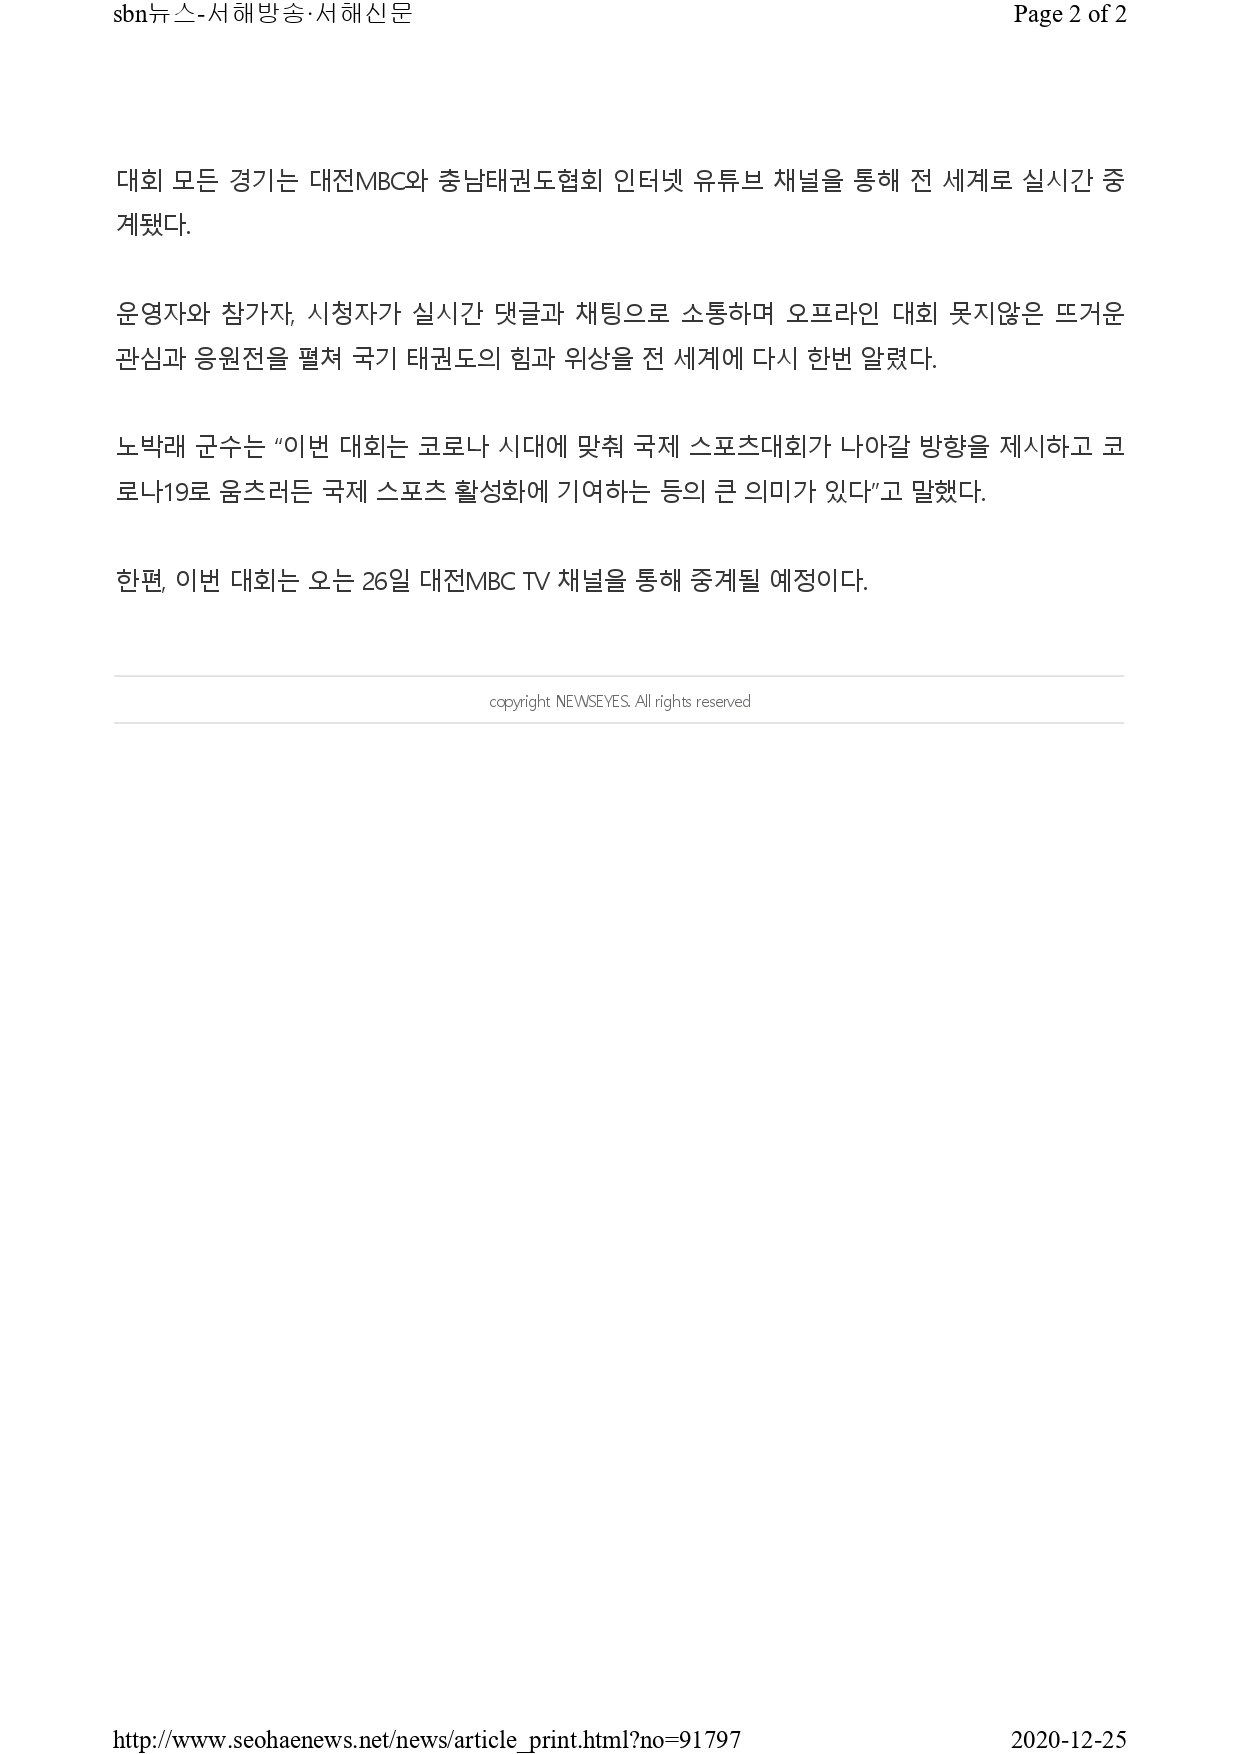 [SBN뉴스] 온라인 서천국제오픈태권도대회 마무리...26일 대전MBC 방송_page-0002.jpg